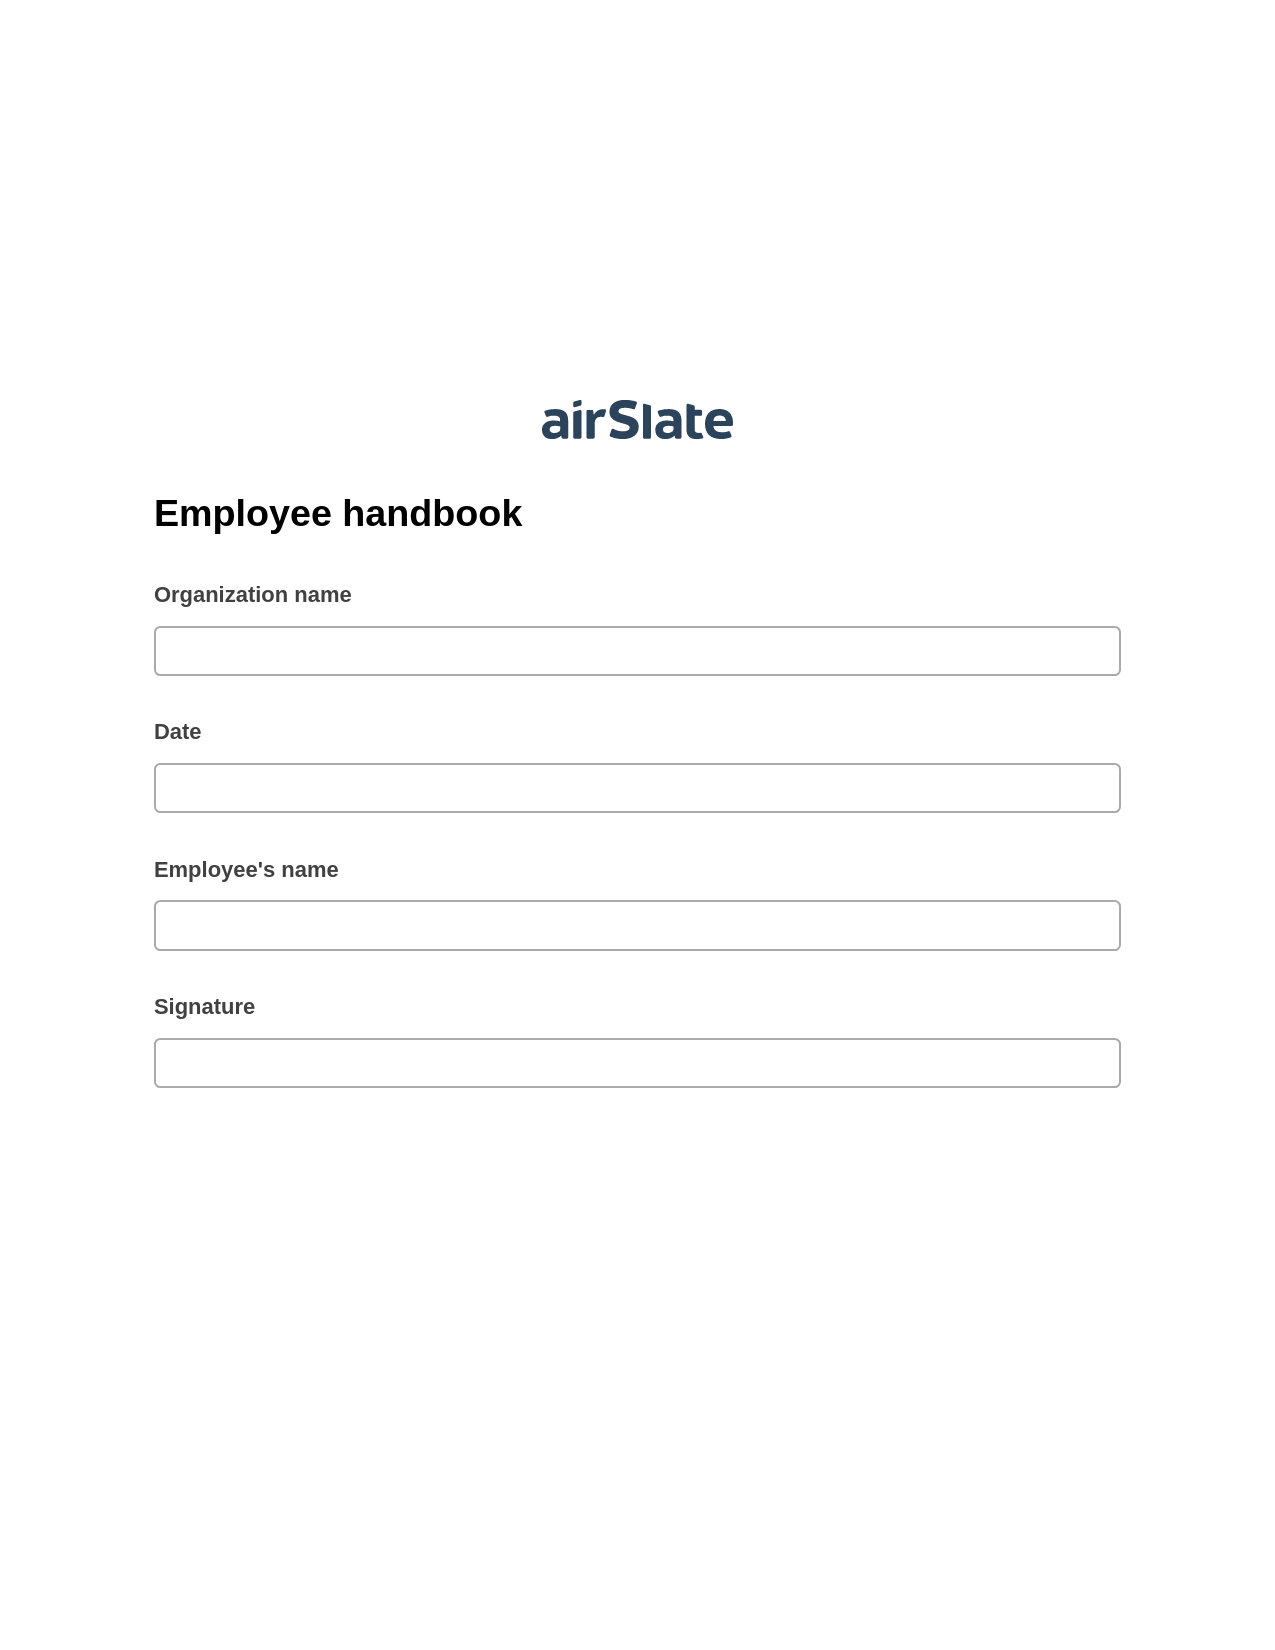 Employee handbook Pre-fill Document Bot, Audit Trail Bot, Box Bot